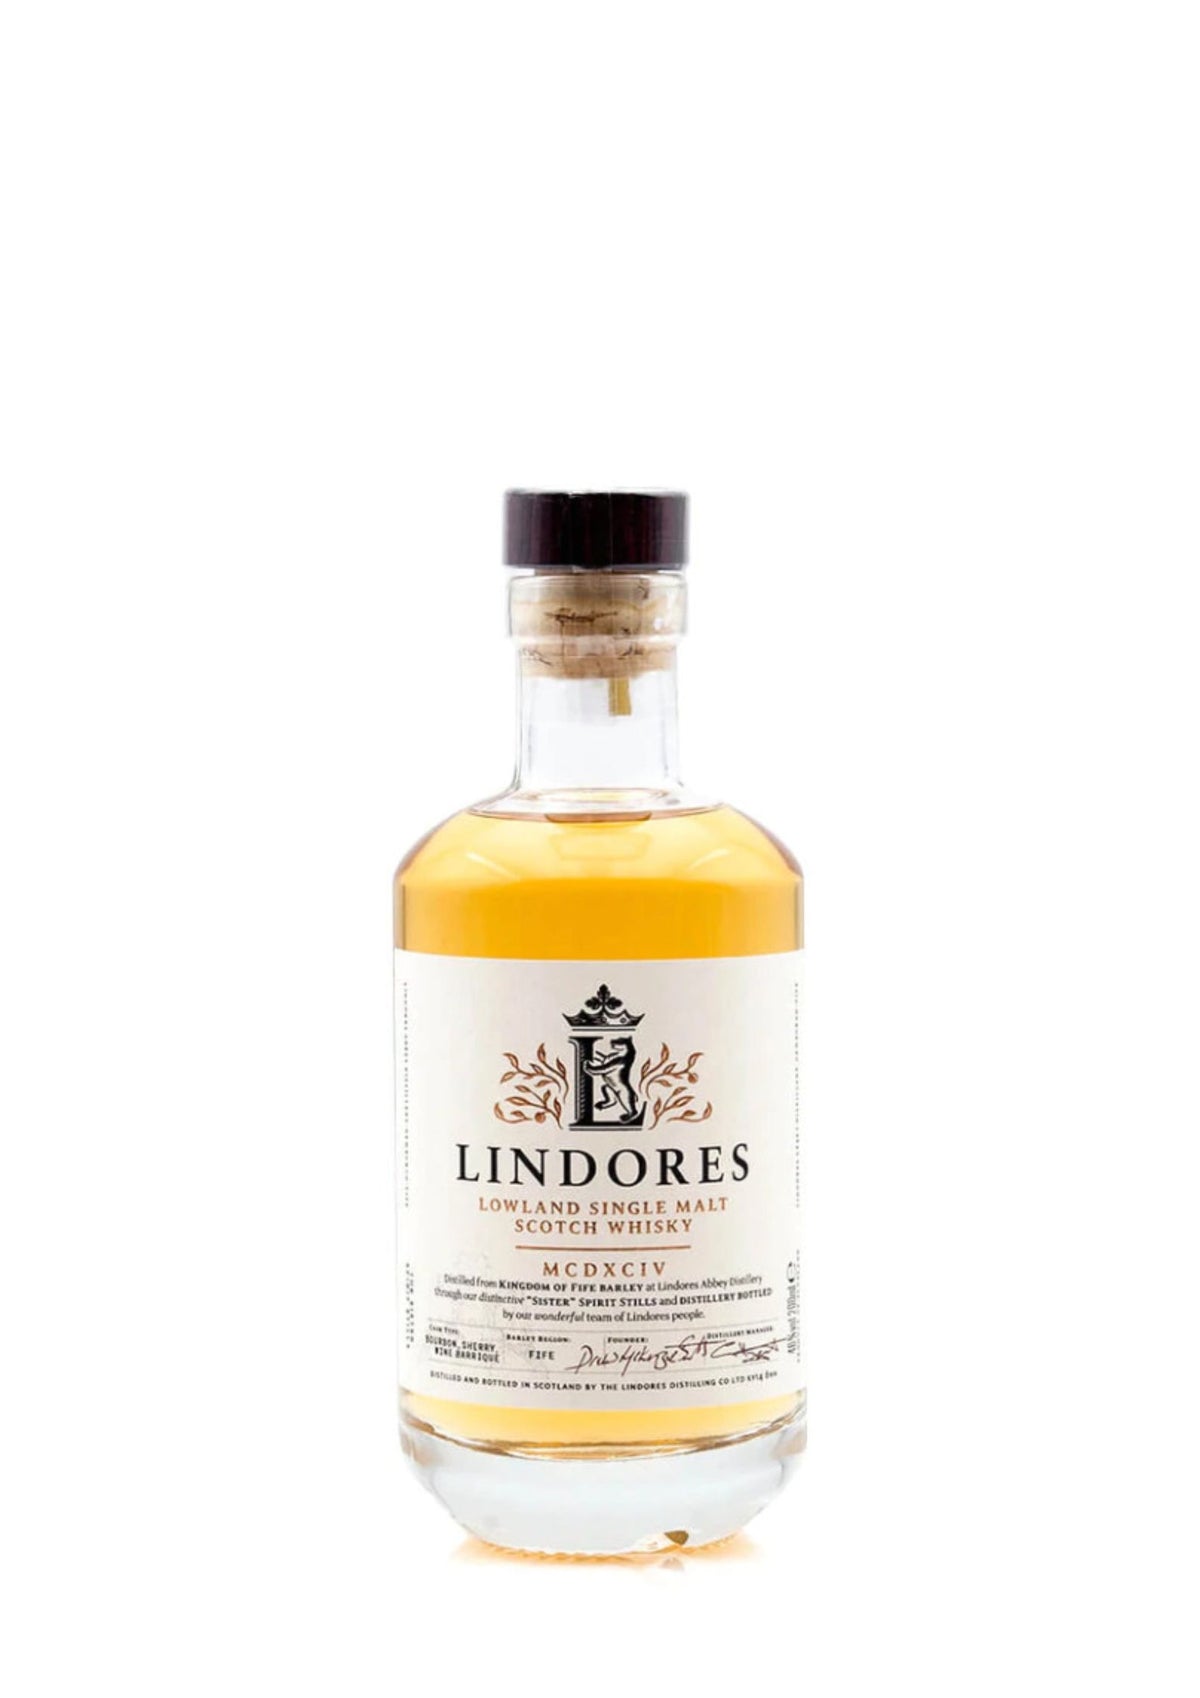 Lindores Abbey Distillery MCDXCIV (1494) Single Malt Scotch Whisky, 46.0%  20cl